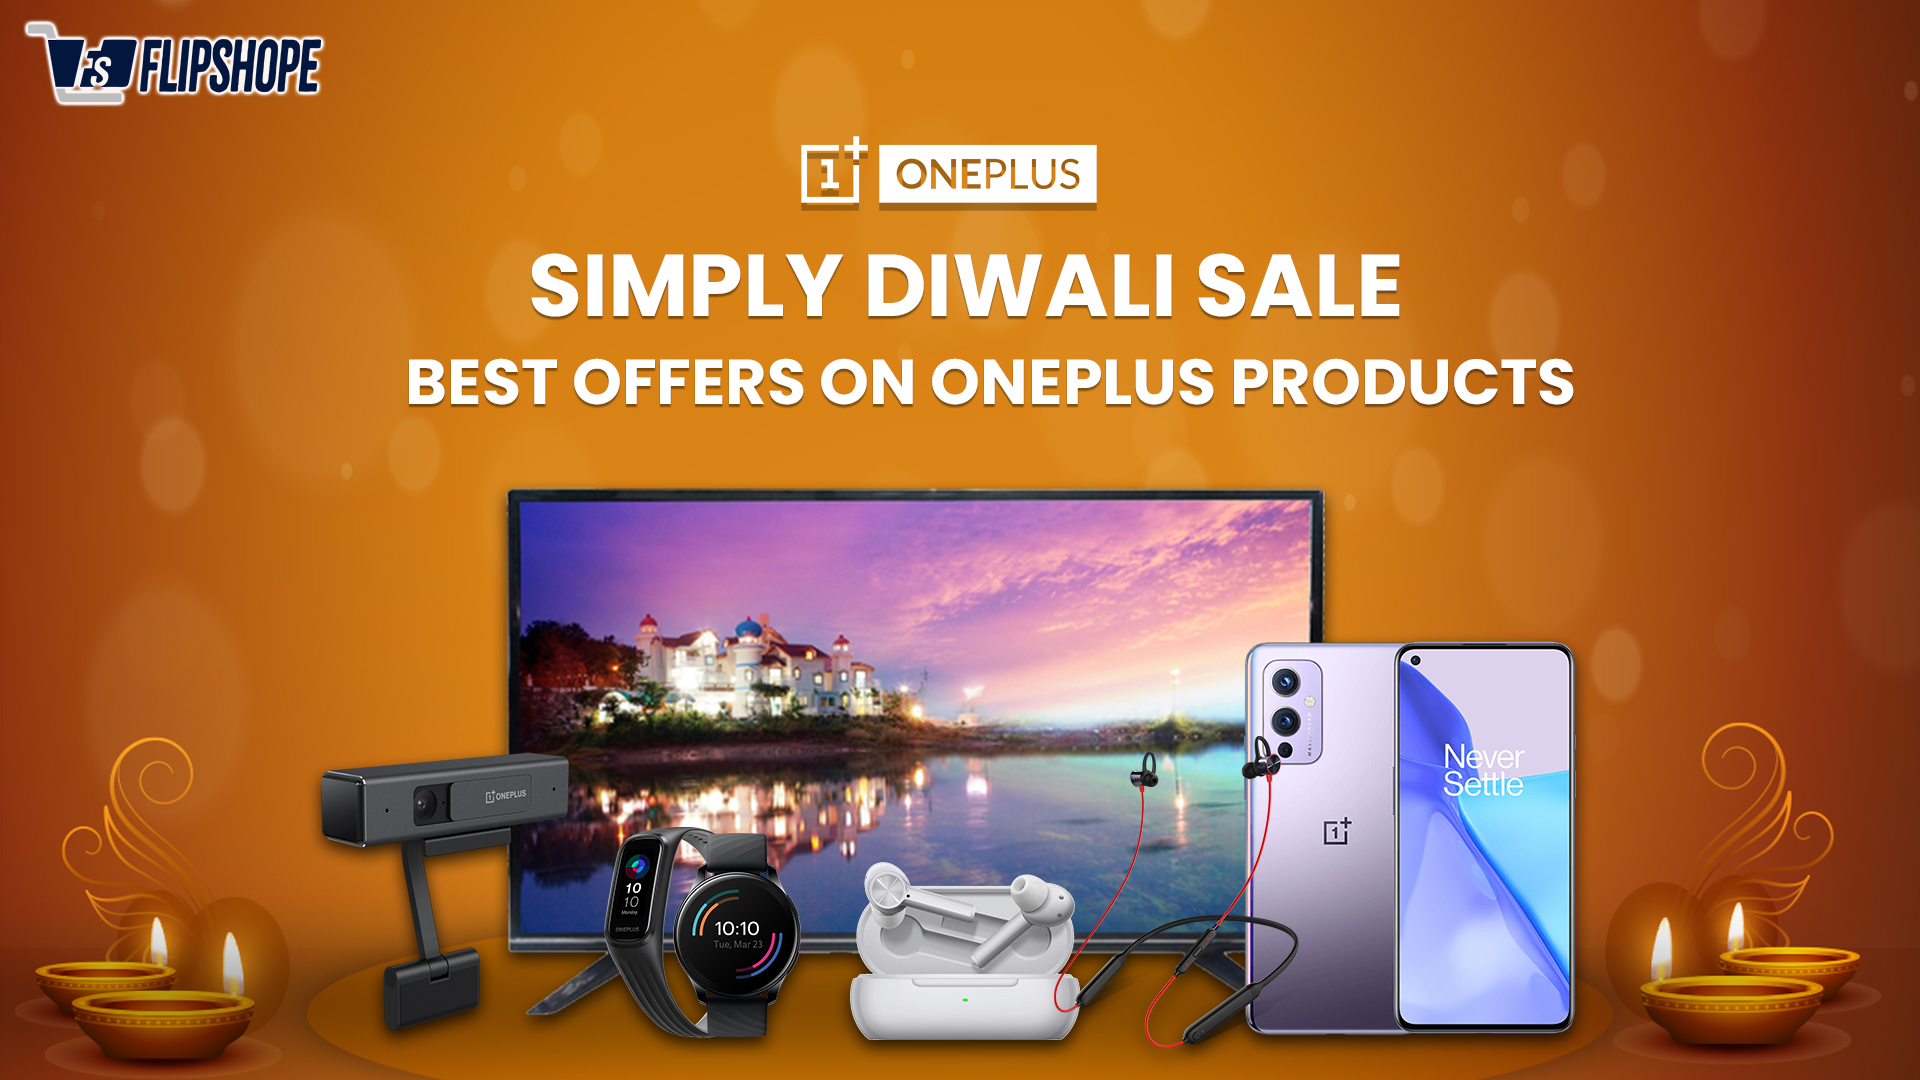 oneplus simply diwali sale